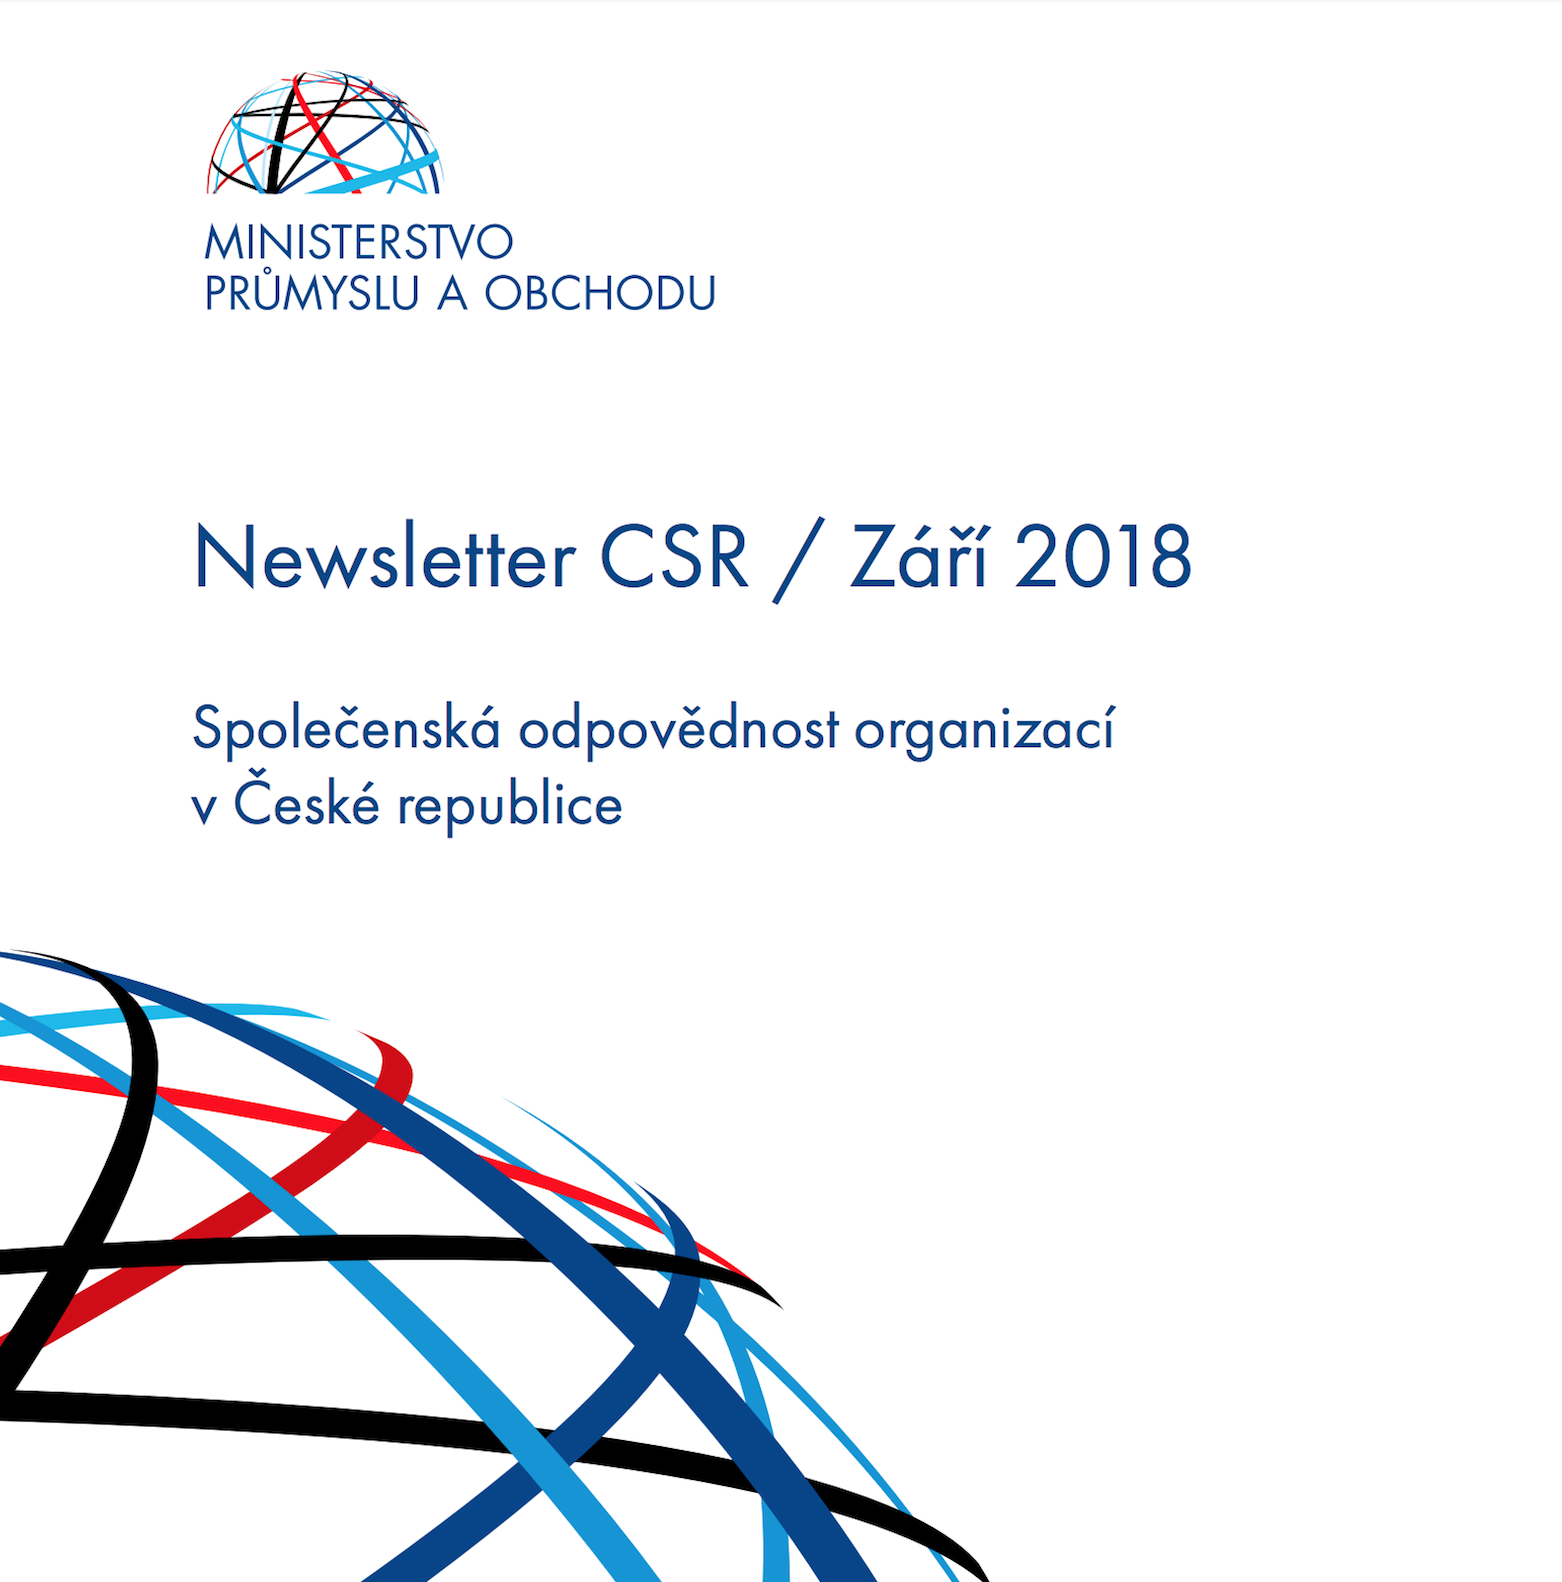 CSR Newsletter in the Czech Republic